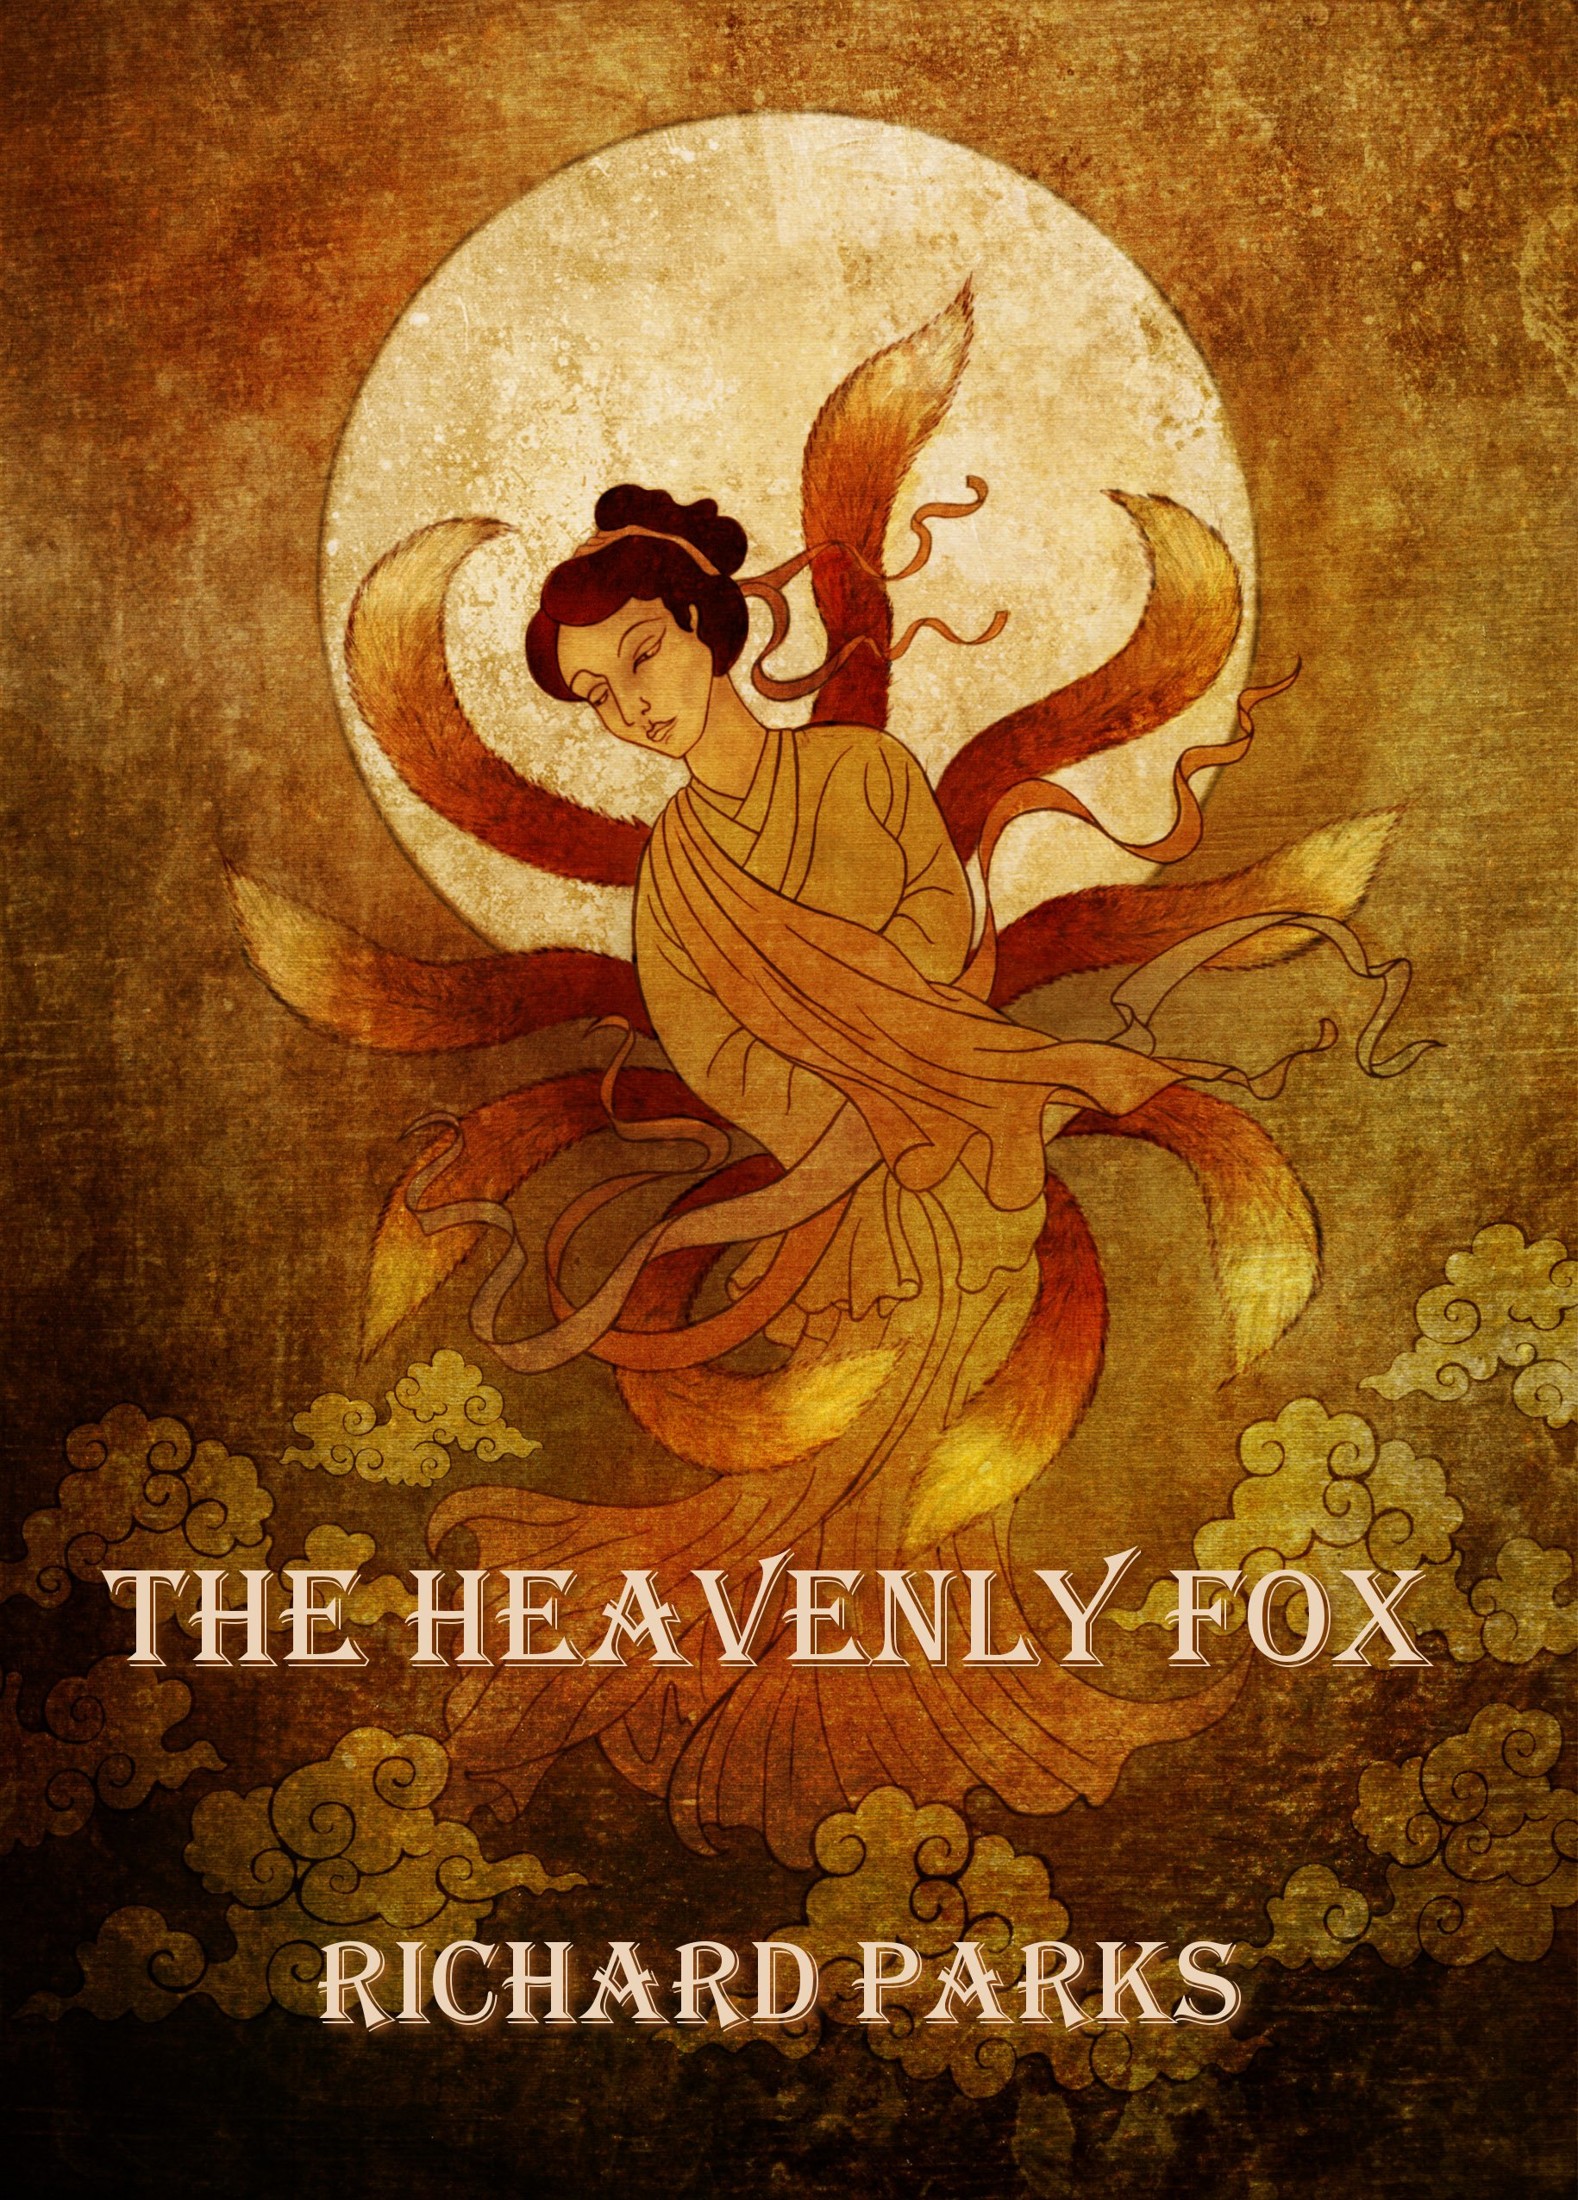 The Heavenly Fox